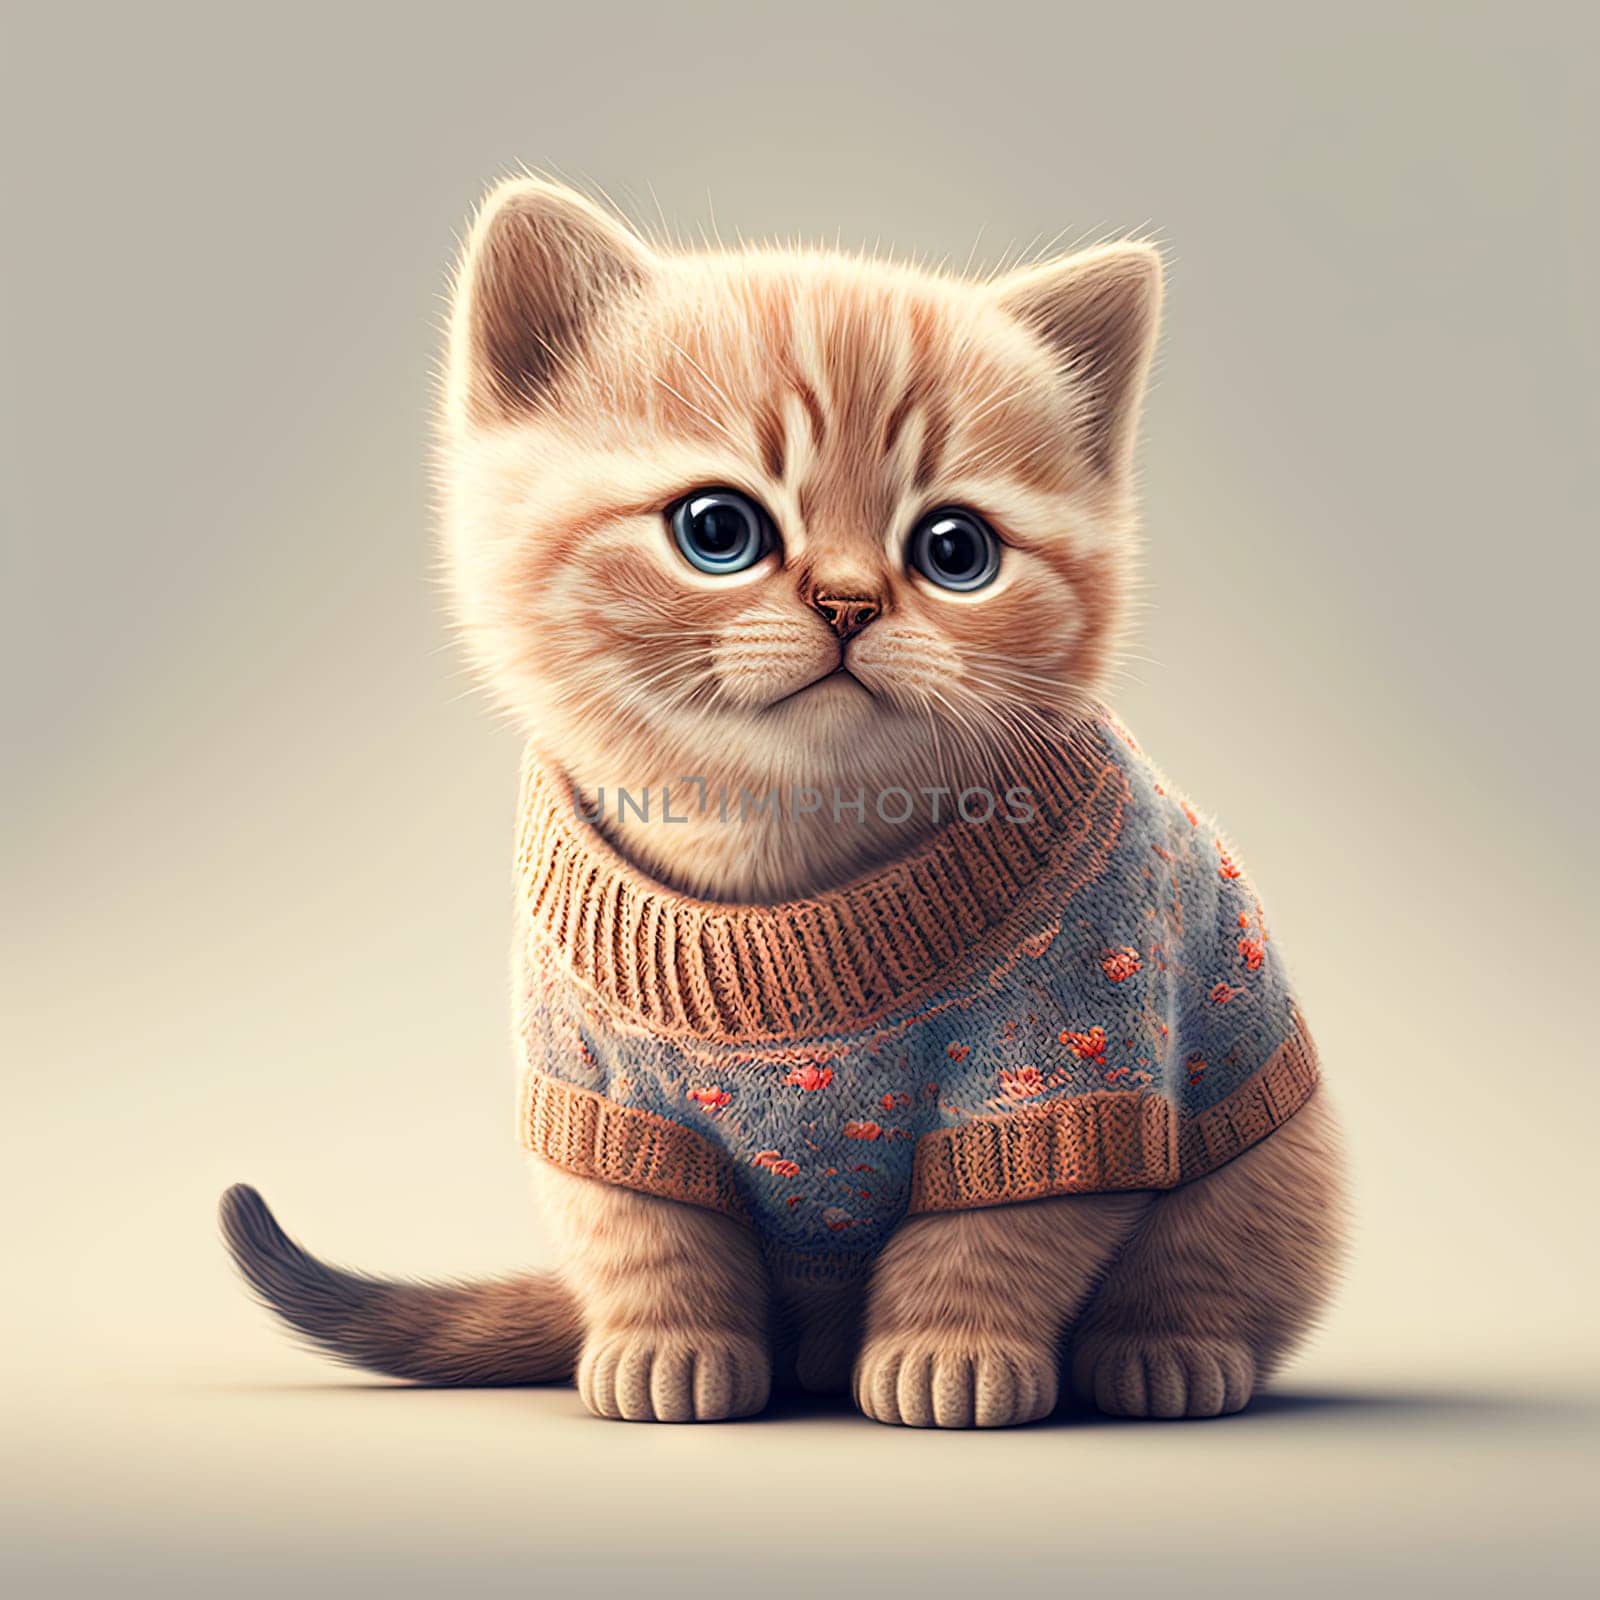 Cute kitten in sweater sitting. Small cat in gray sweater watching. Generative AI illustration. by SwillKch